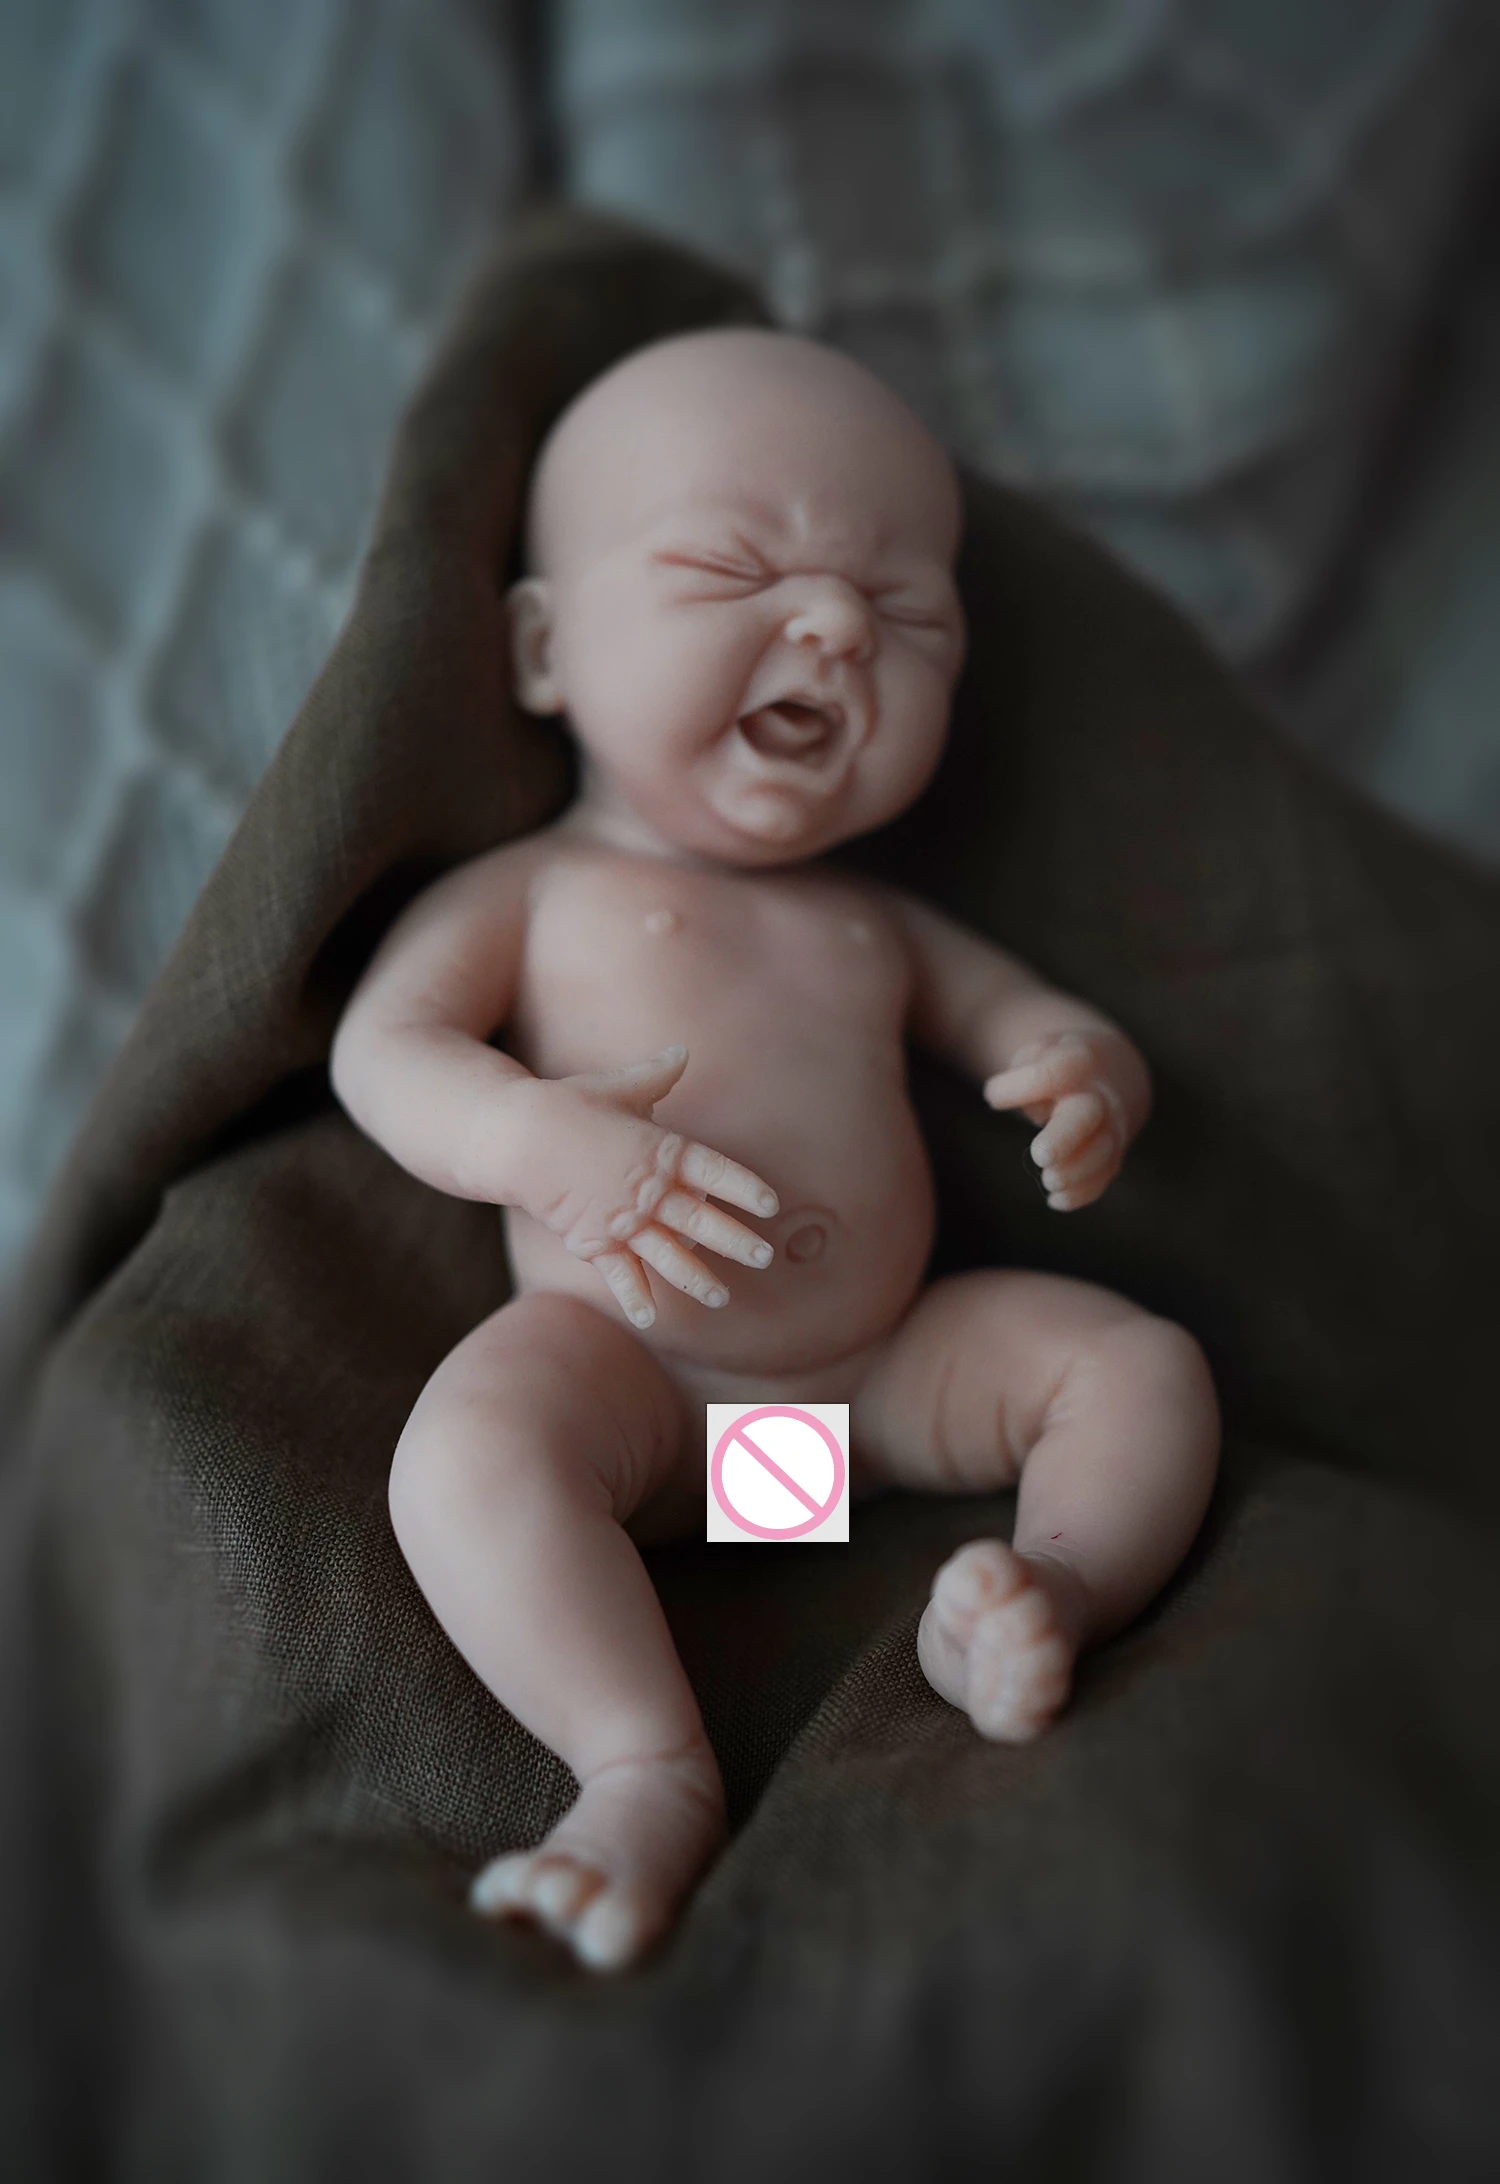 

7" Boy Micro Preemie Full Body Silicone CryBaby Doll "Ethan" Lifelike Mini Reborn Doll Surprice Children Anti-Stress My Melody